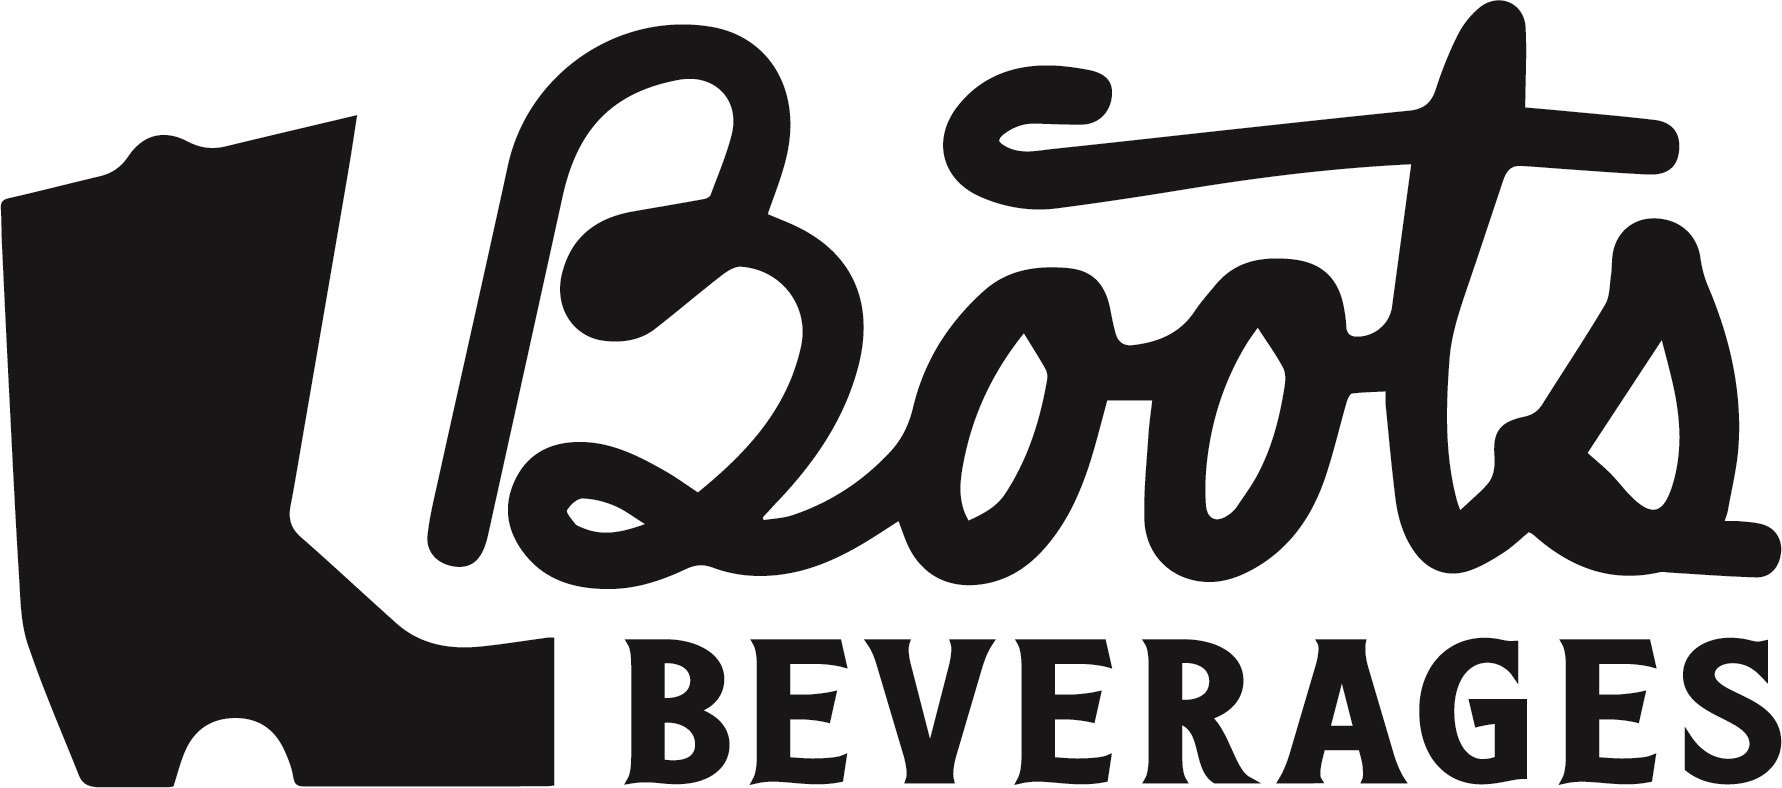 Boots Beverages